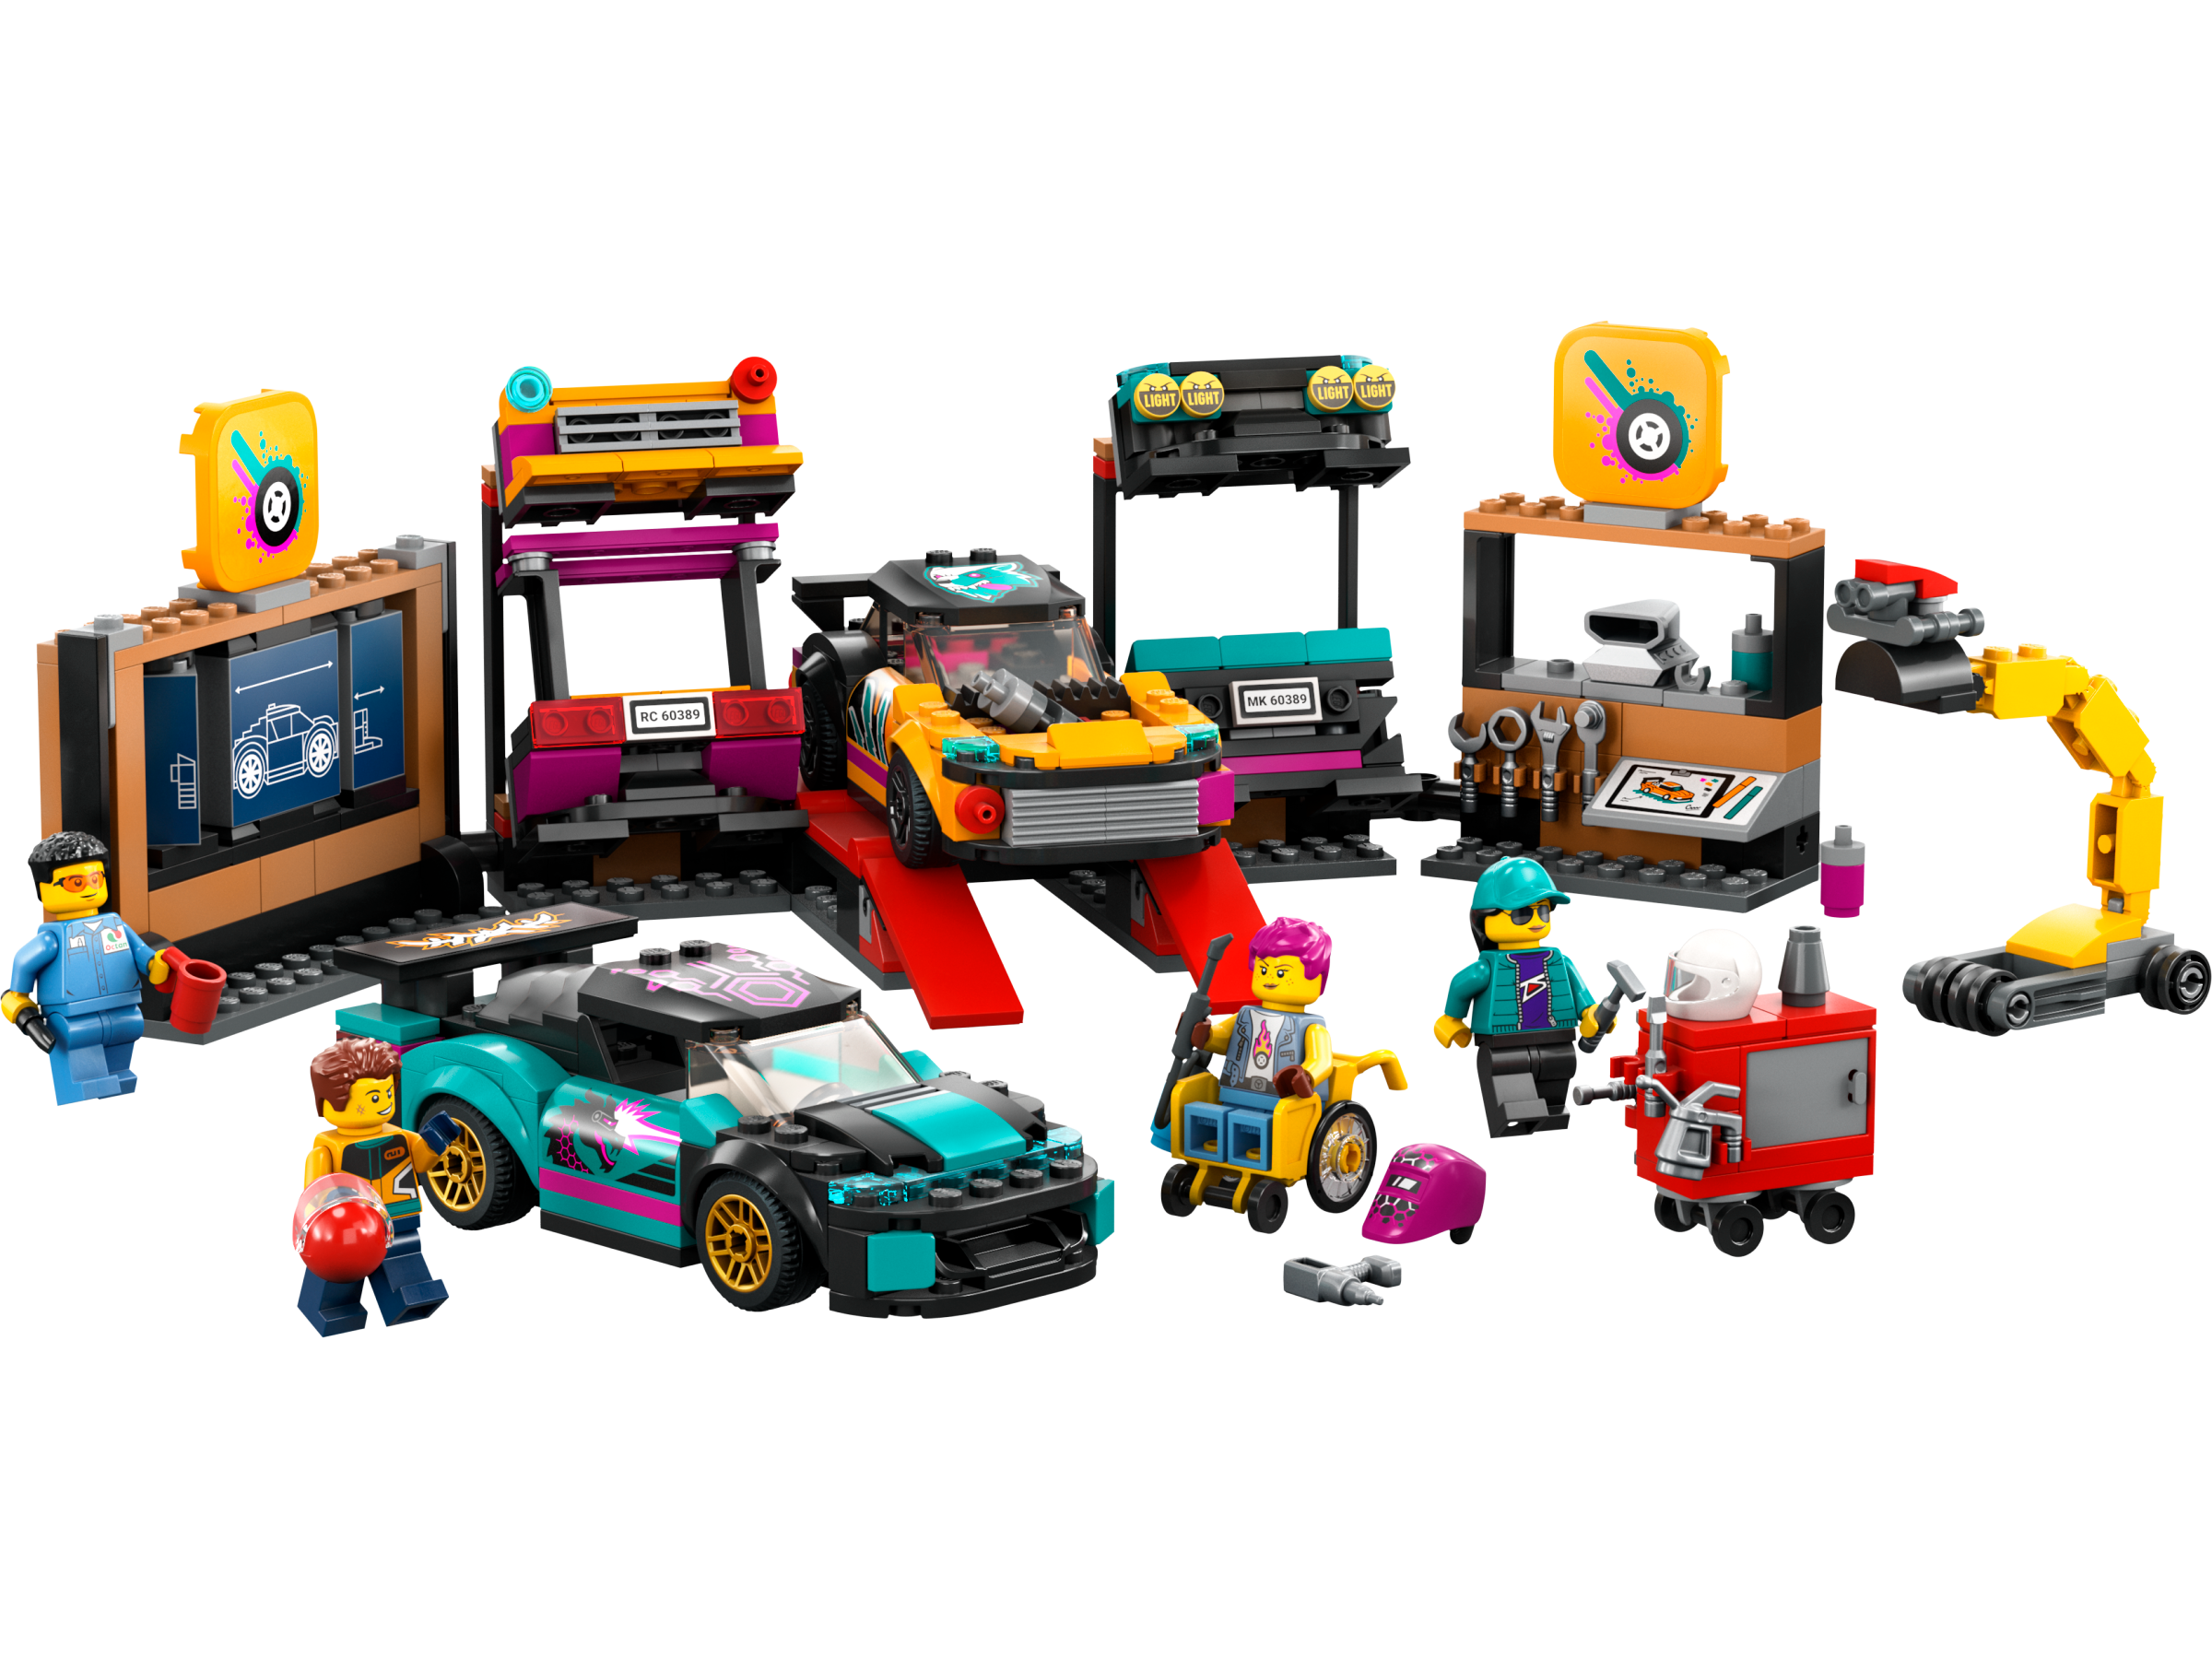 60389 Le Garage De Customisation Lego® City - N/A - Kiabi - 49.79€